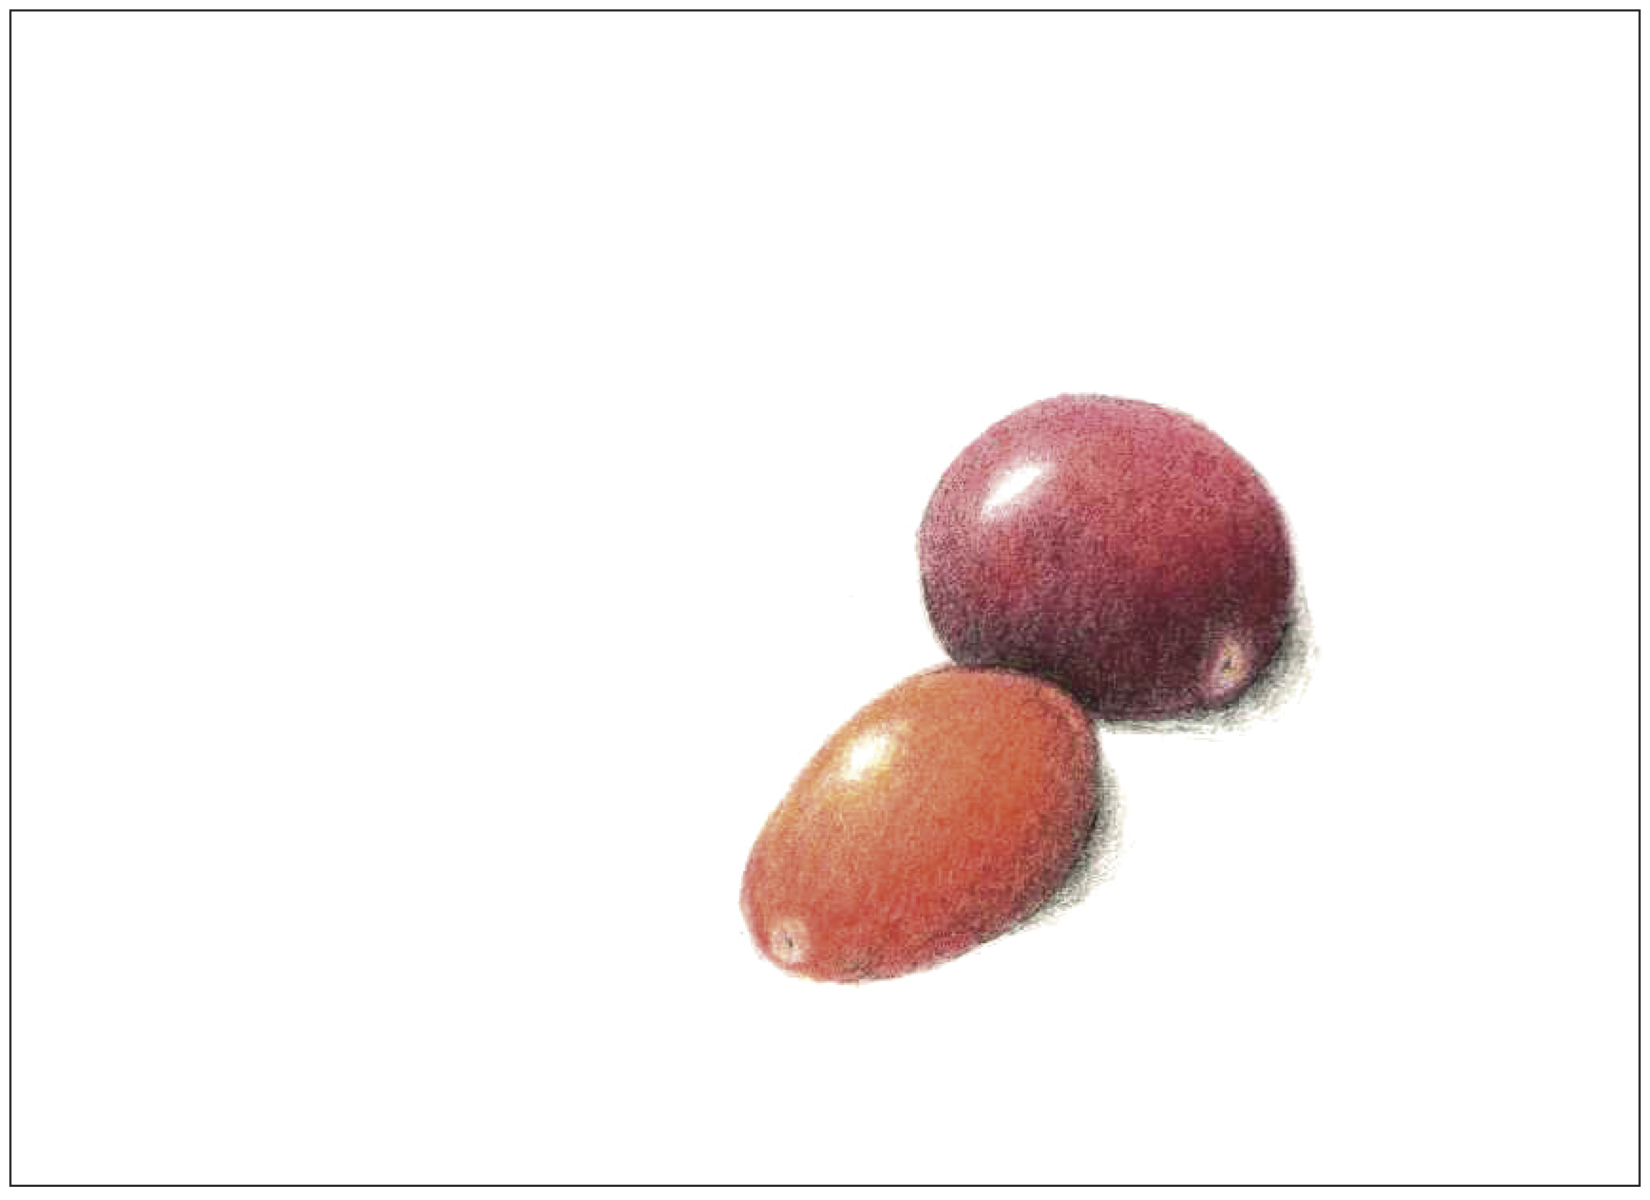 Susan Skoorka, Cherry Tomatoes